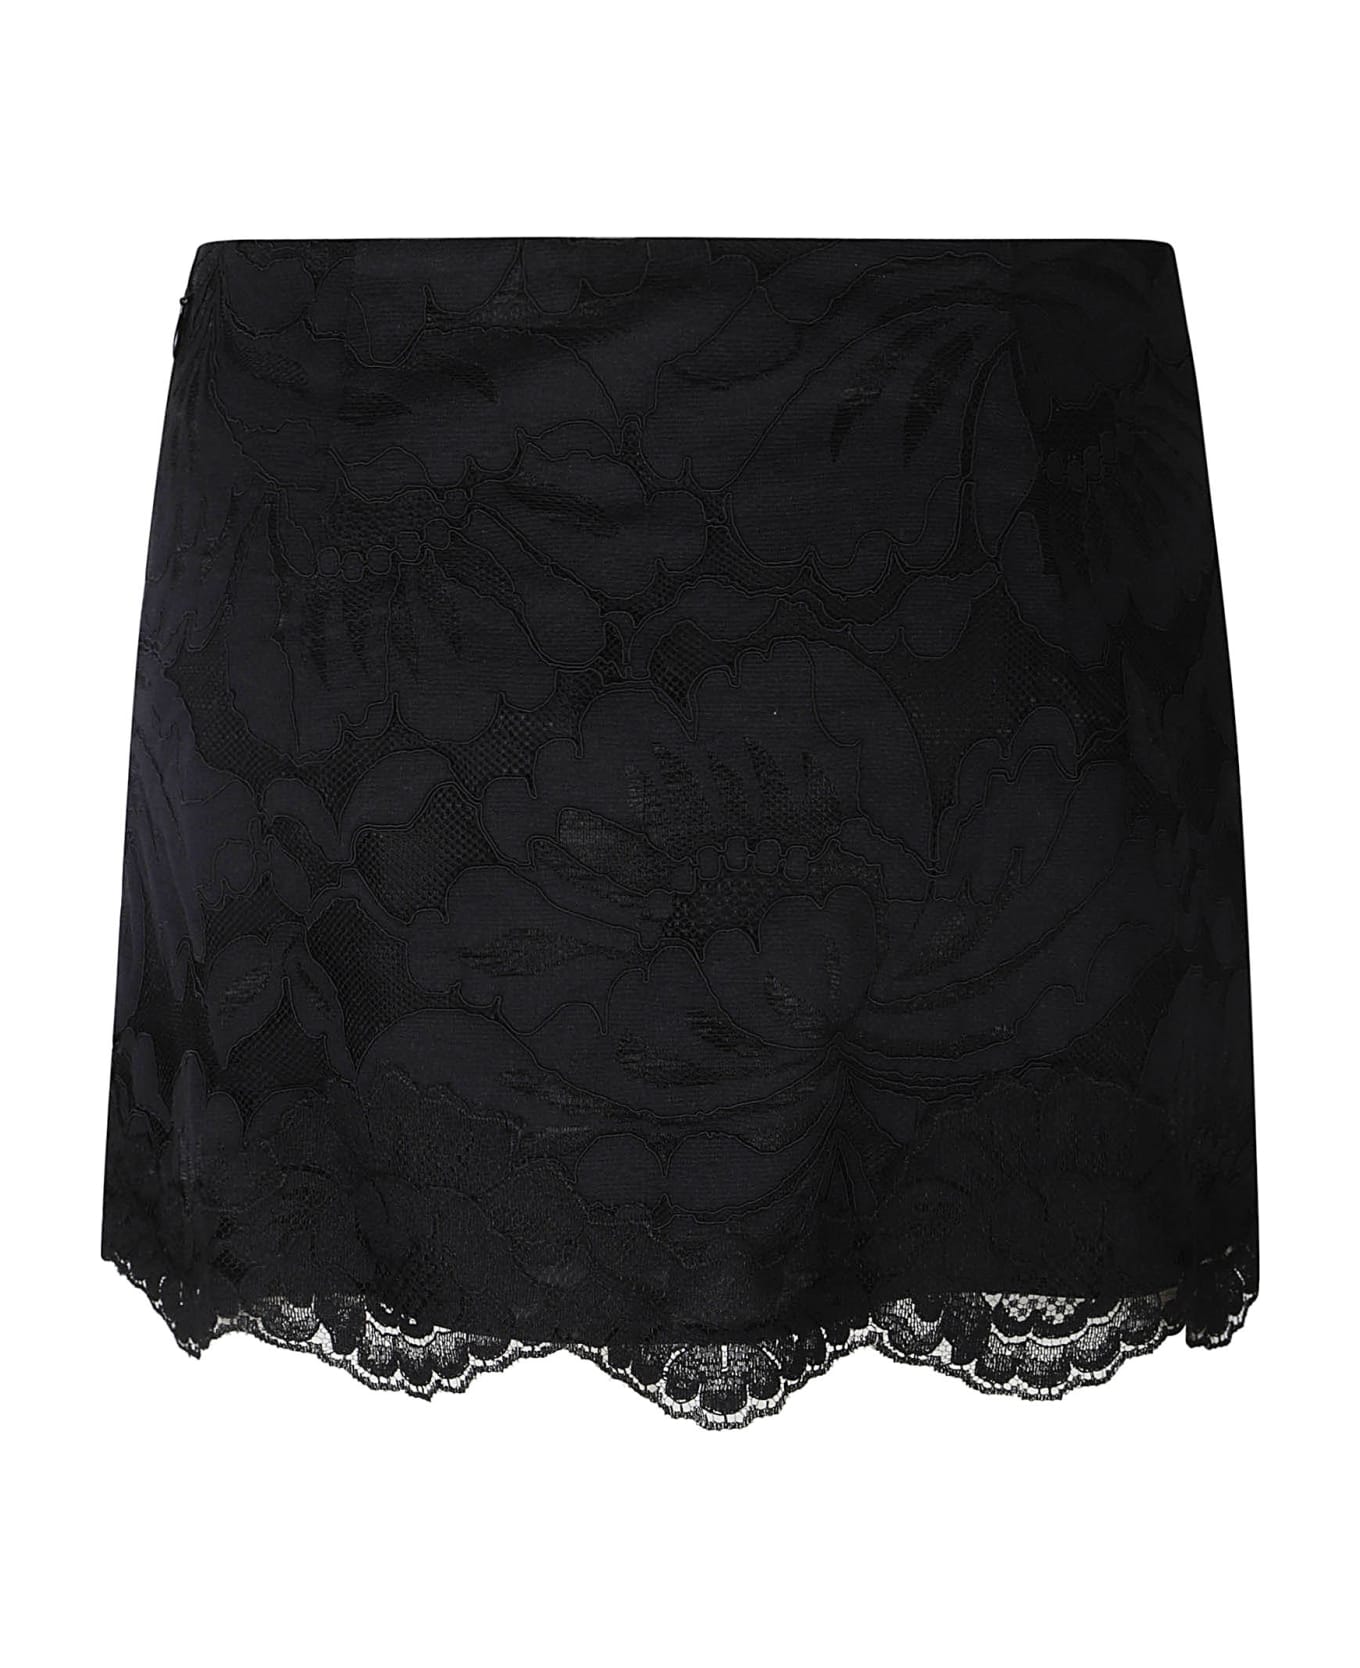 N.21 Floral Laced Skirt - Black スカート